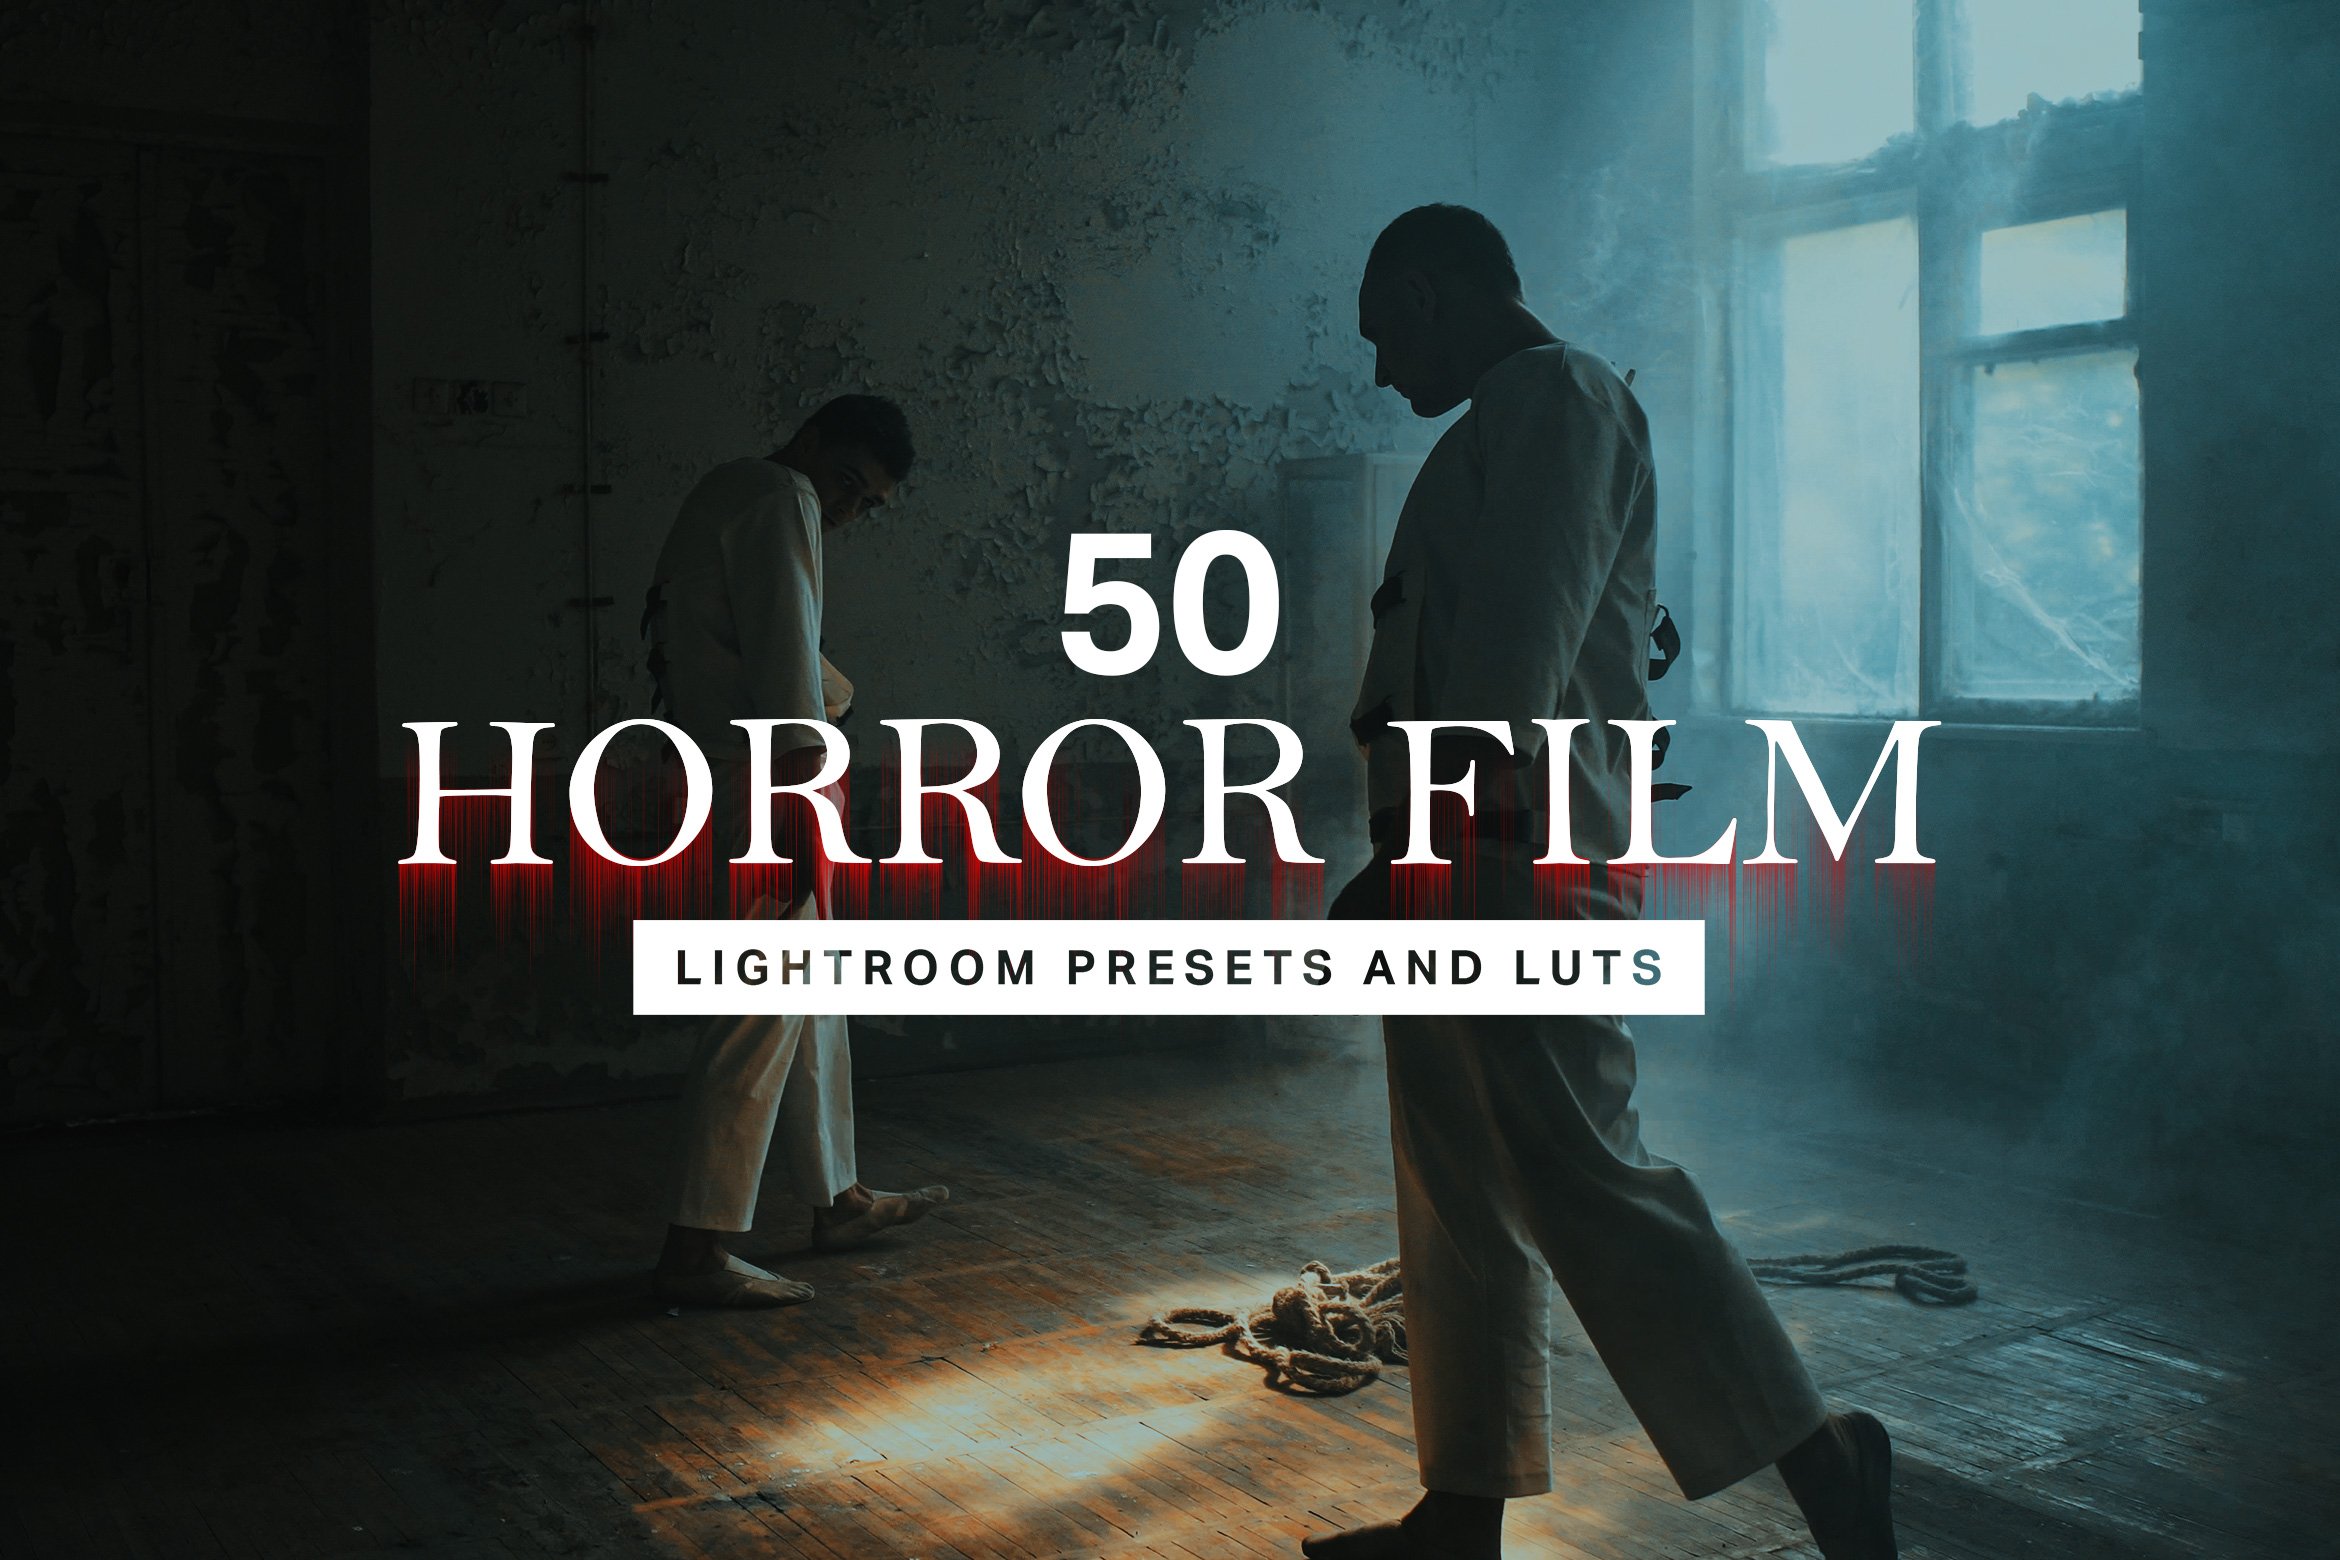 50 Horror Film Lightroom Presetscover image.